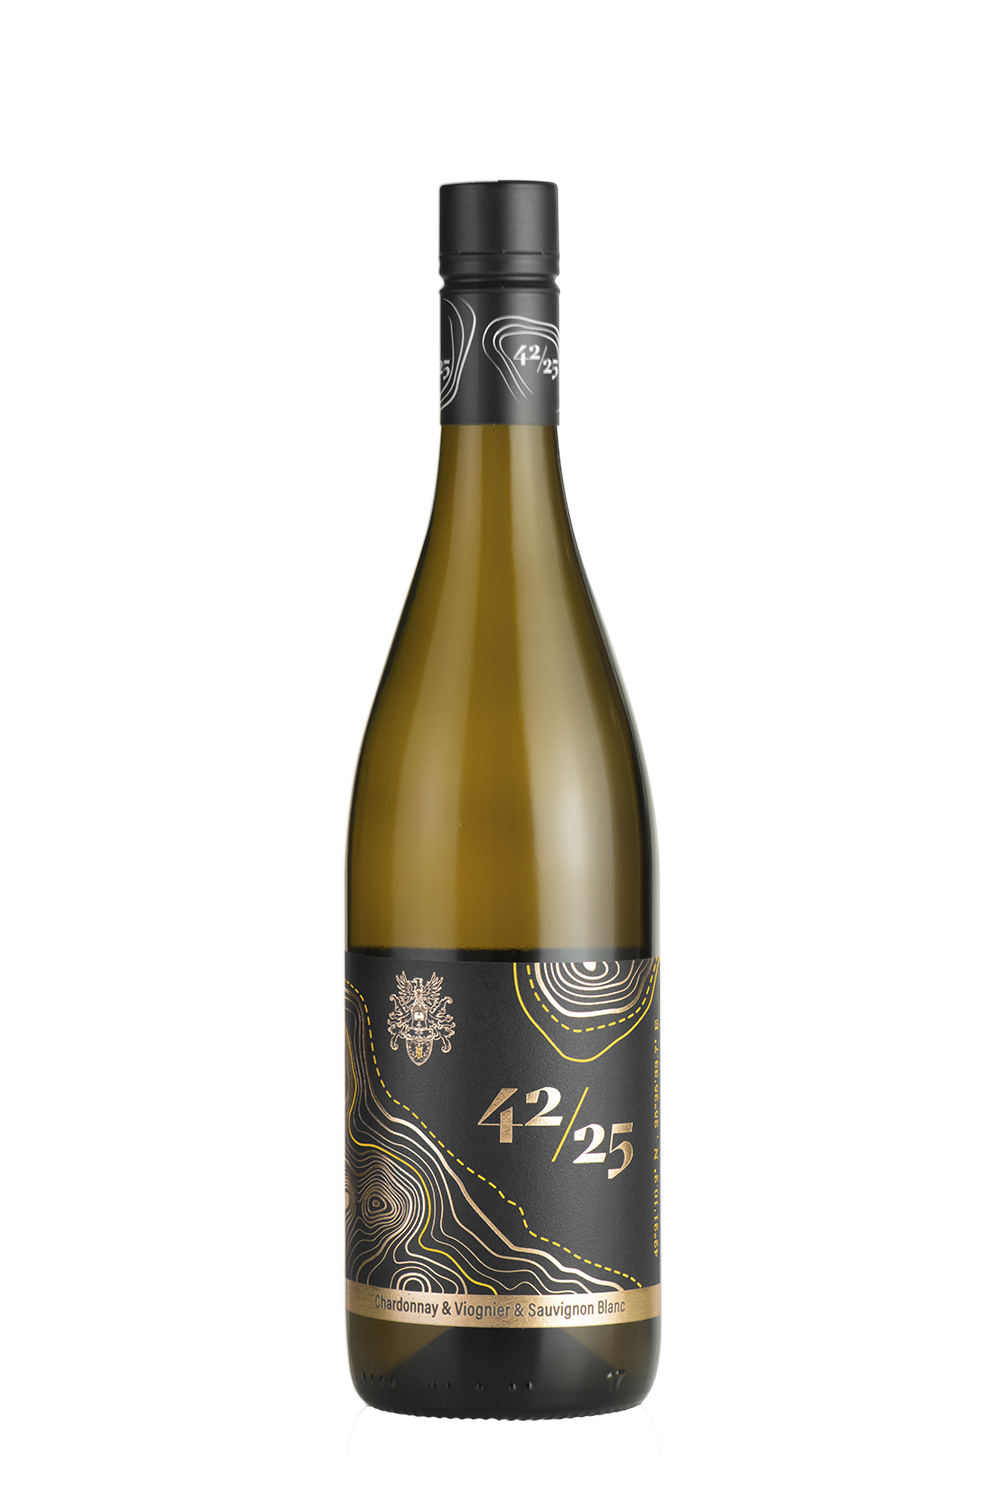 42/25 Chardonnay & Viognier & Sauvignon Blanc